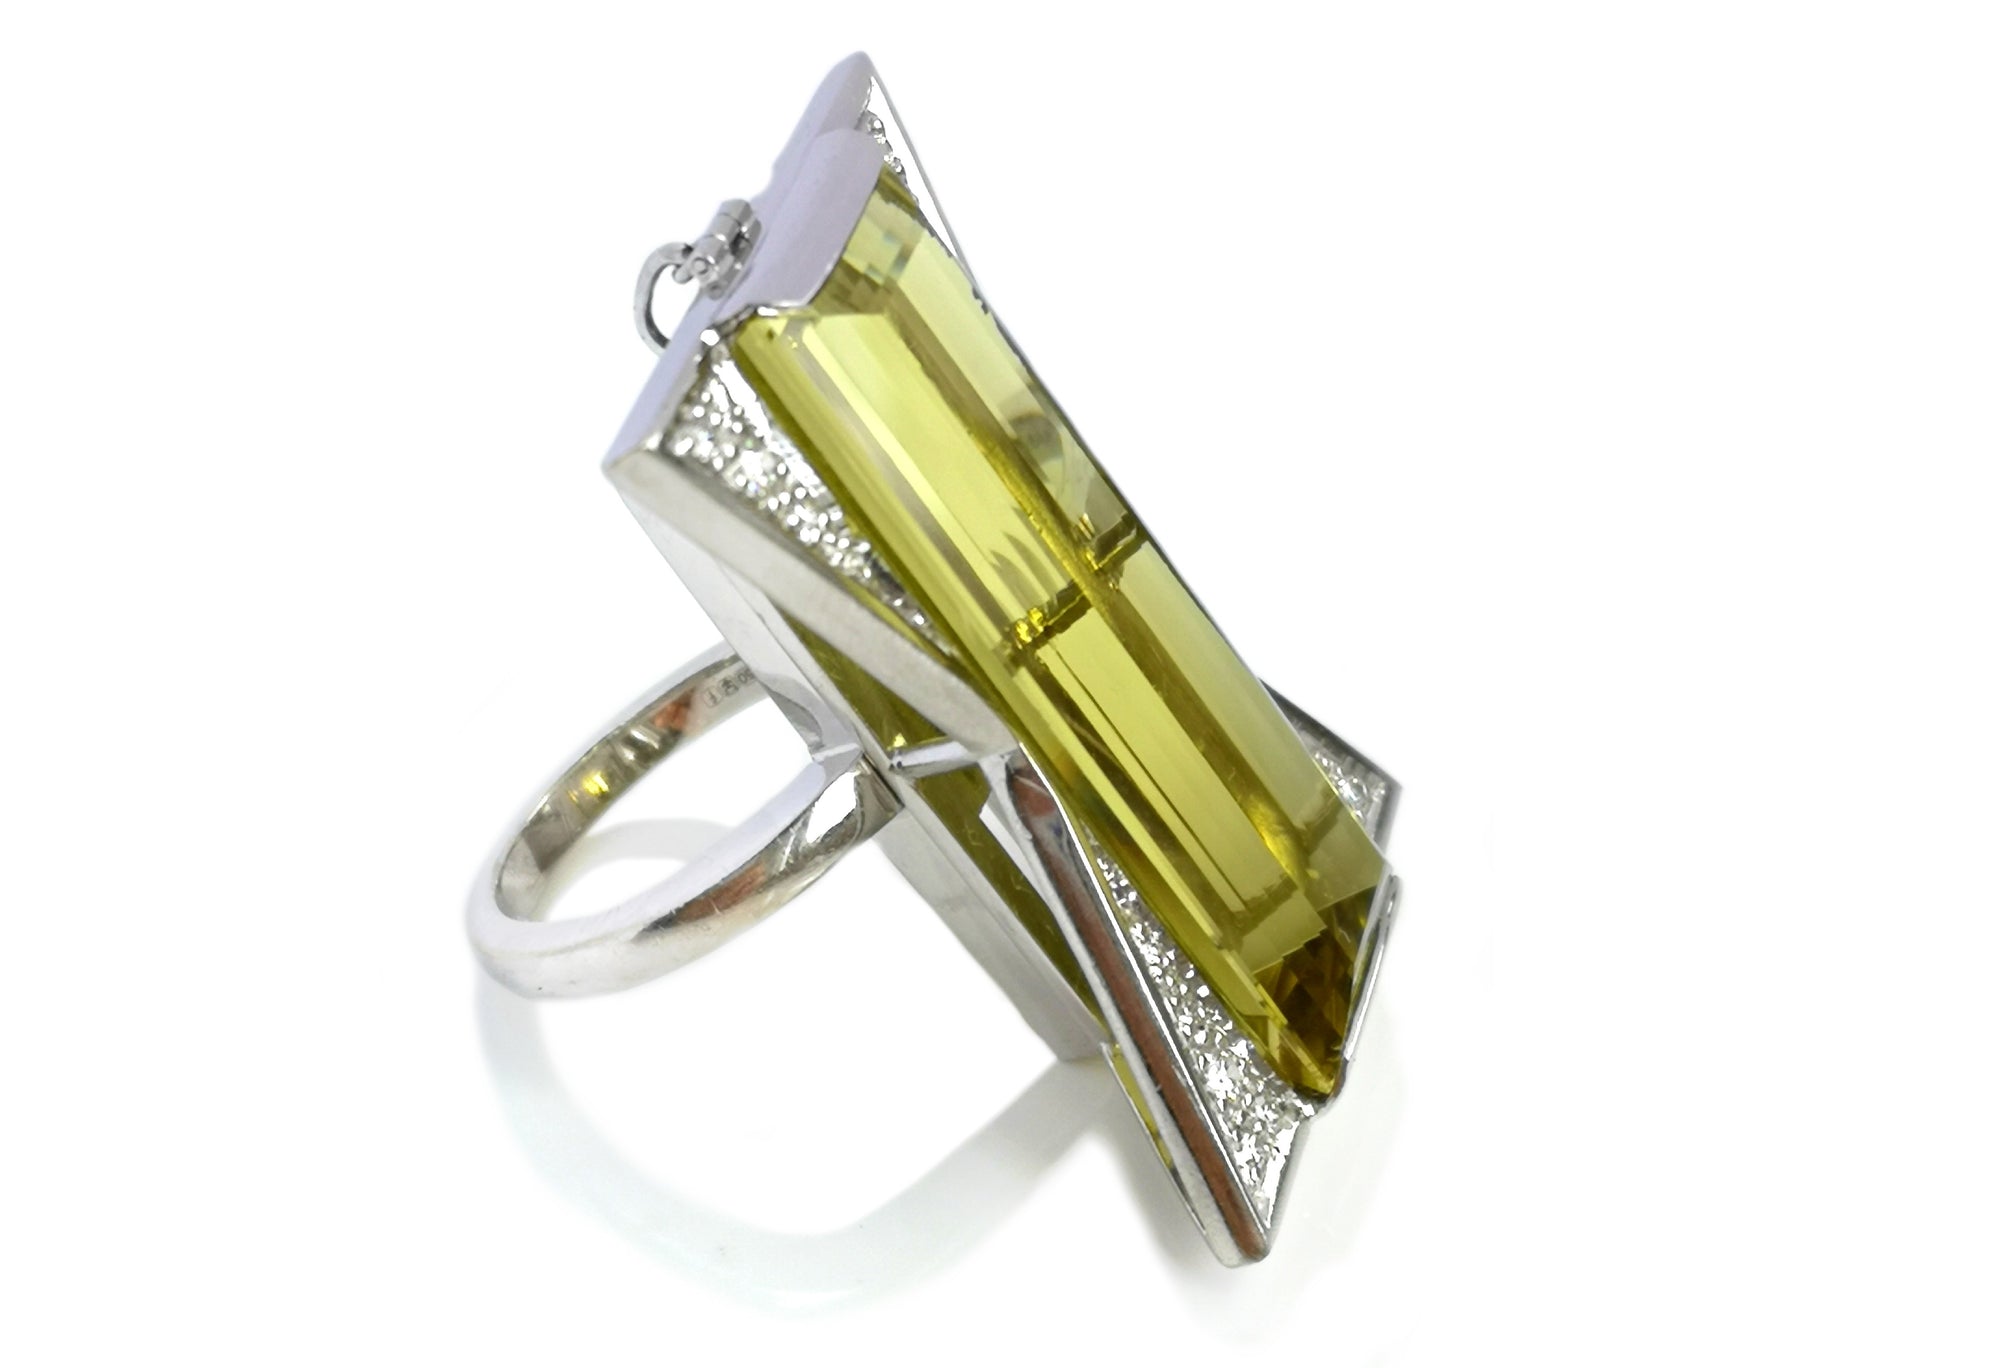 Art Deco Style 37.16ct Heliodor Yellow Beryl & 0.5ct Diamond Transformation Ring / Pendant in 18k White Gold